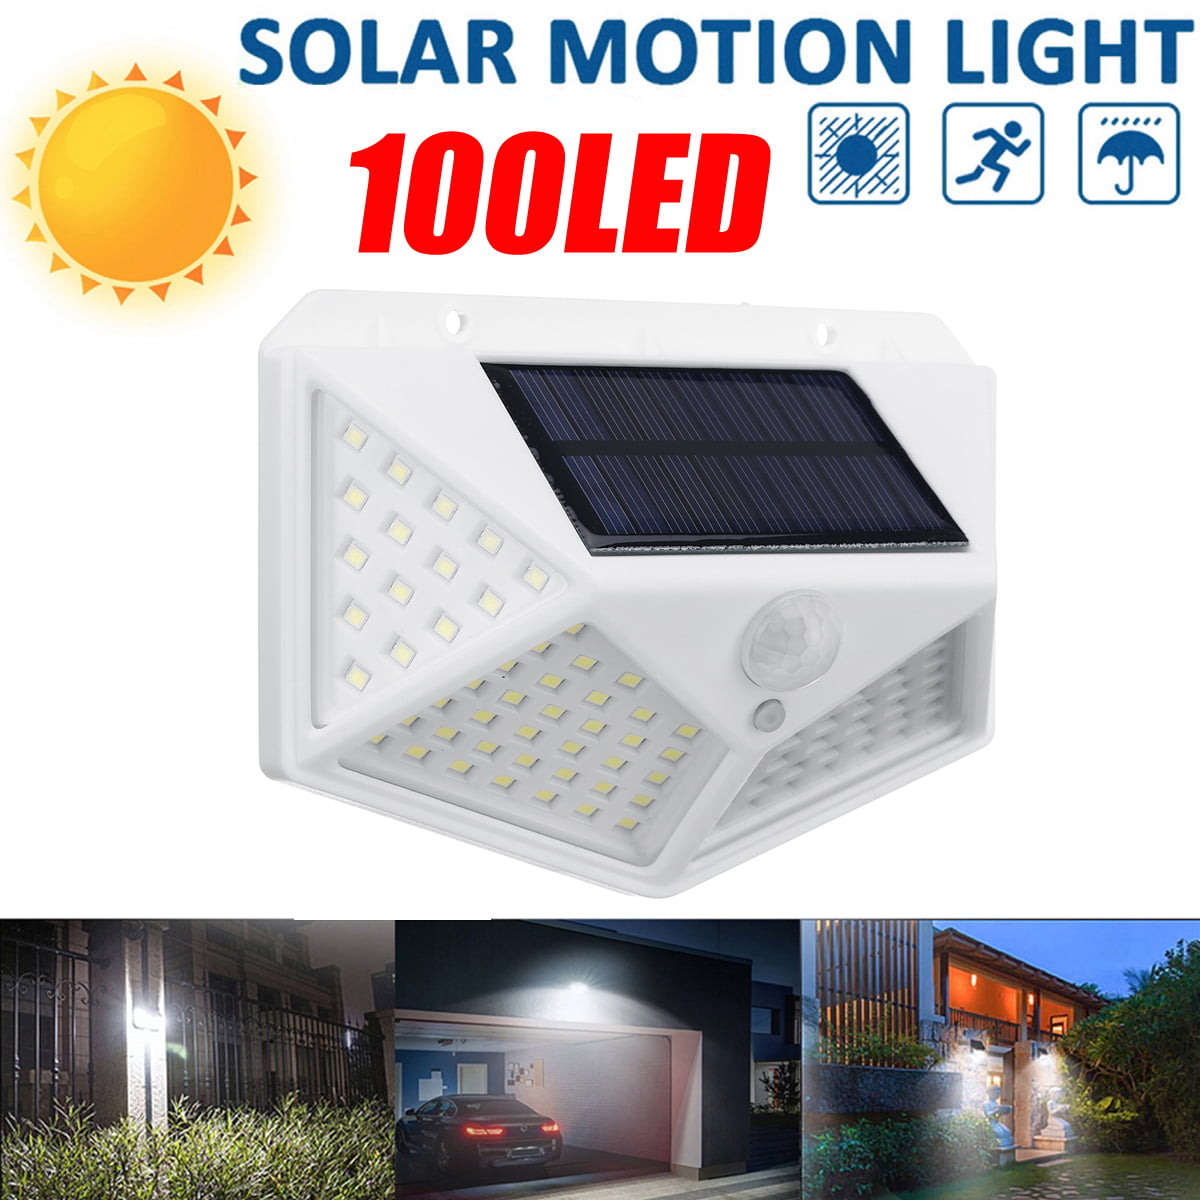 1-2PC 250LED Wall lights Lamp Solar Motion Sensor Light Outdoor Garden Yard Lamp 